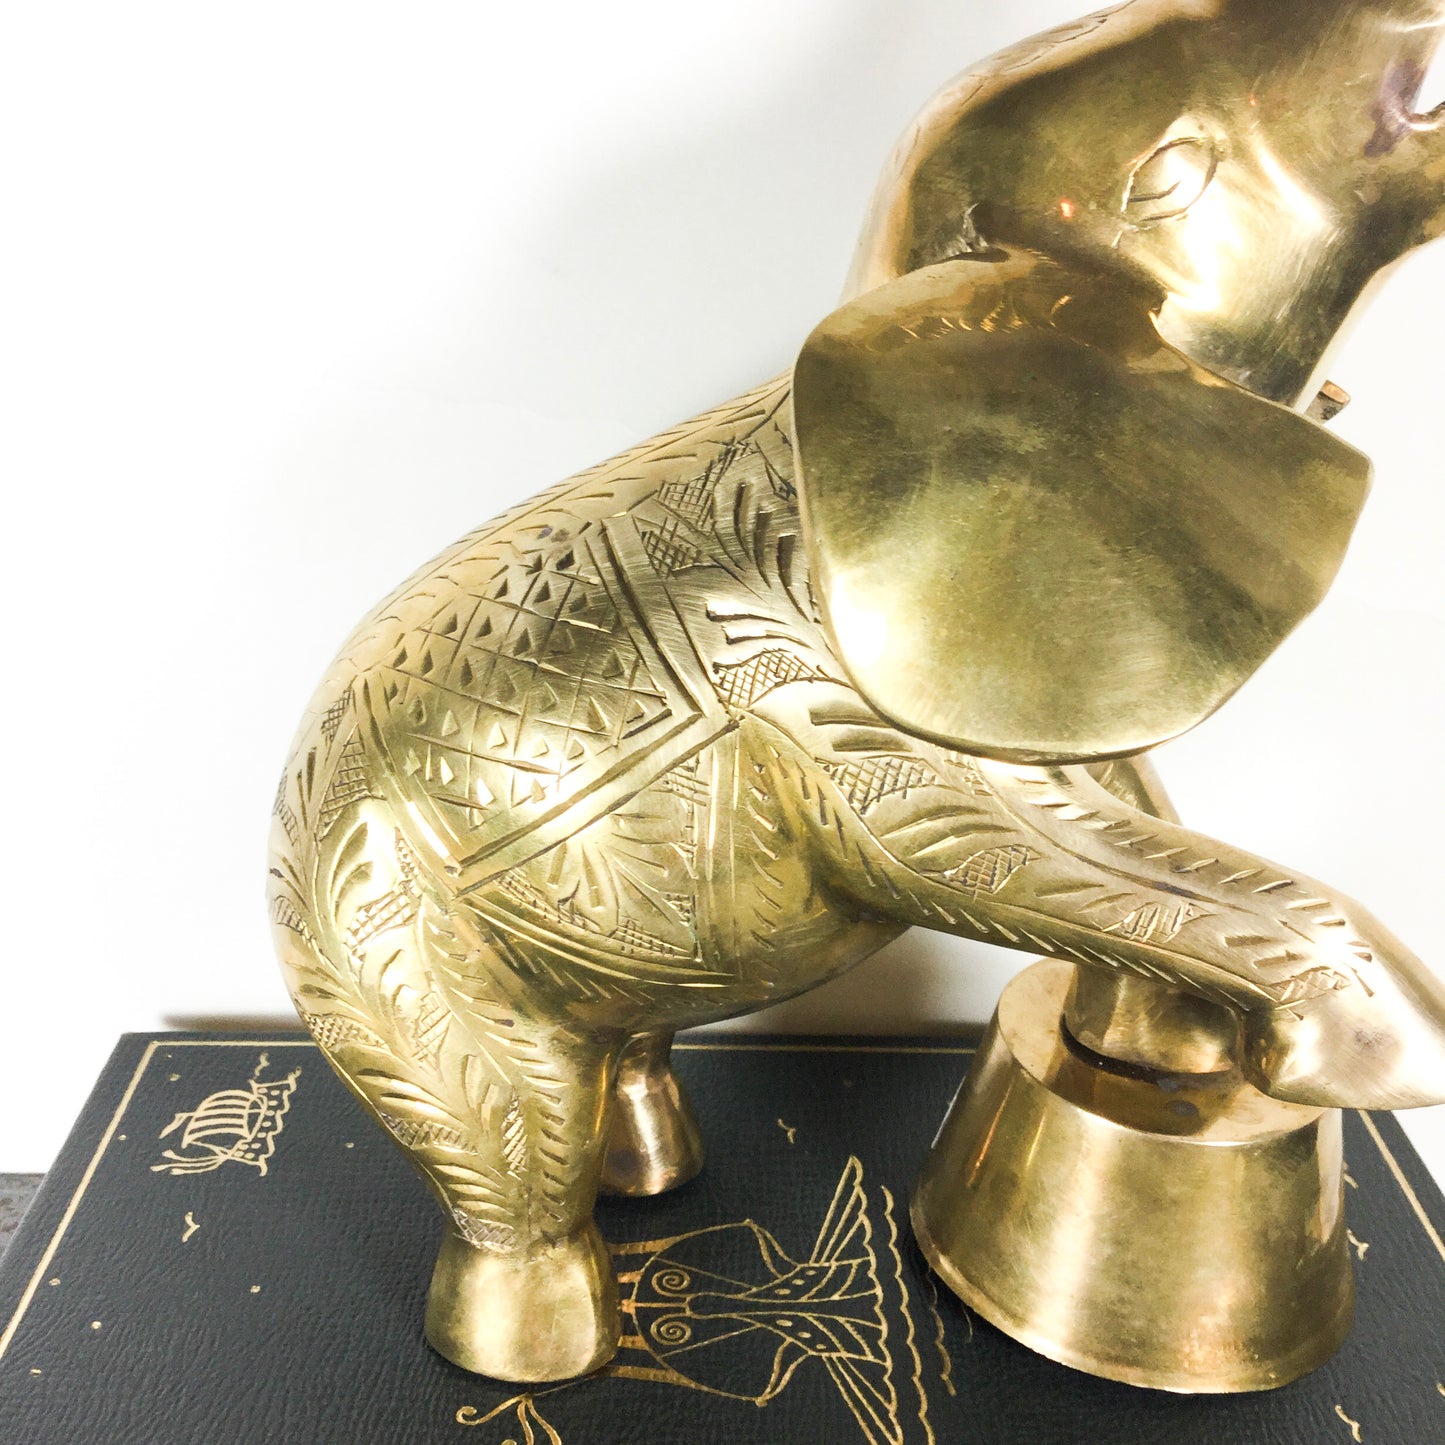 Brass Elephant Statue - very detailed